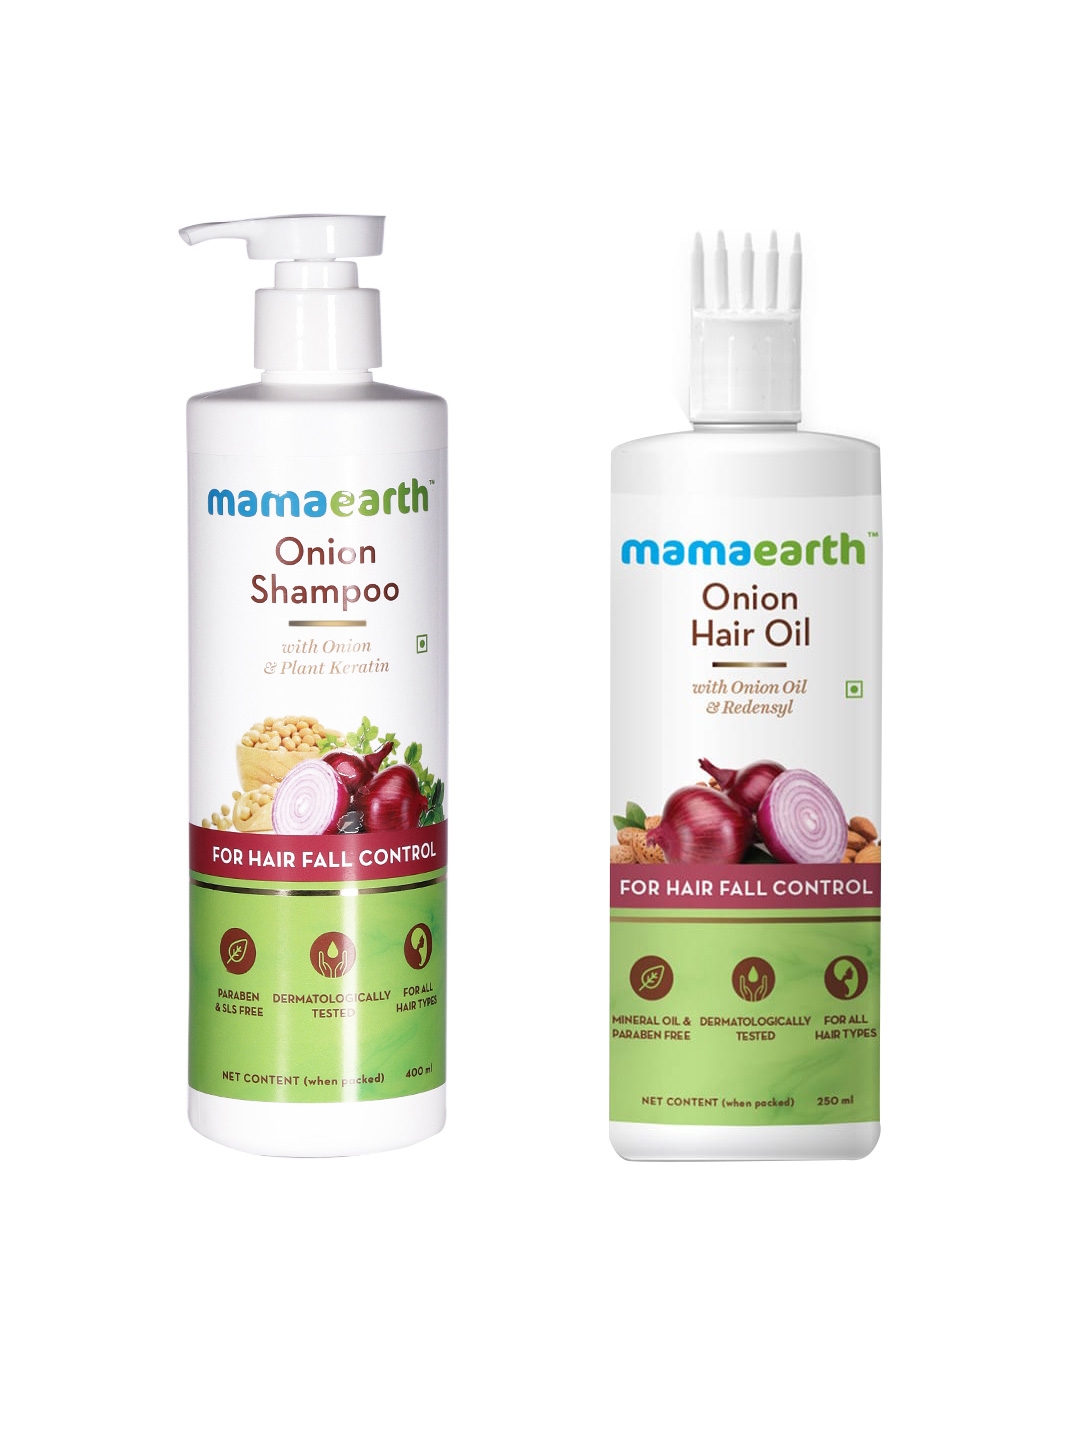 Mamaearth Onion Hair Oil for Hair Fall Control 100ml || The MallBD